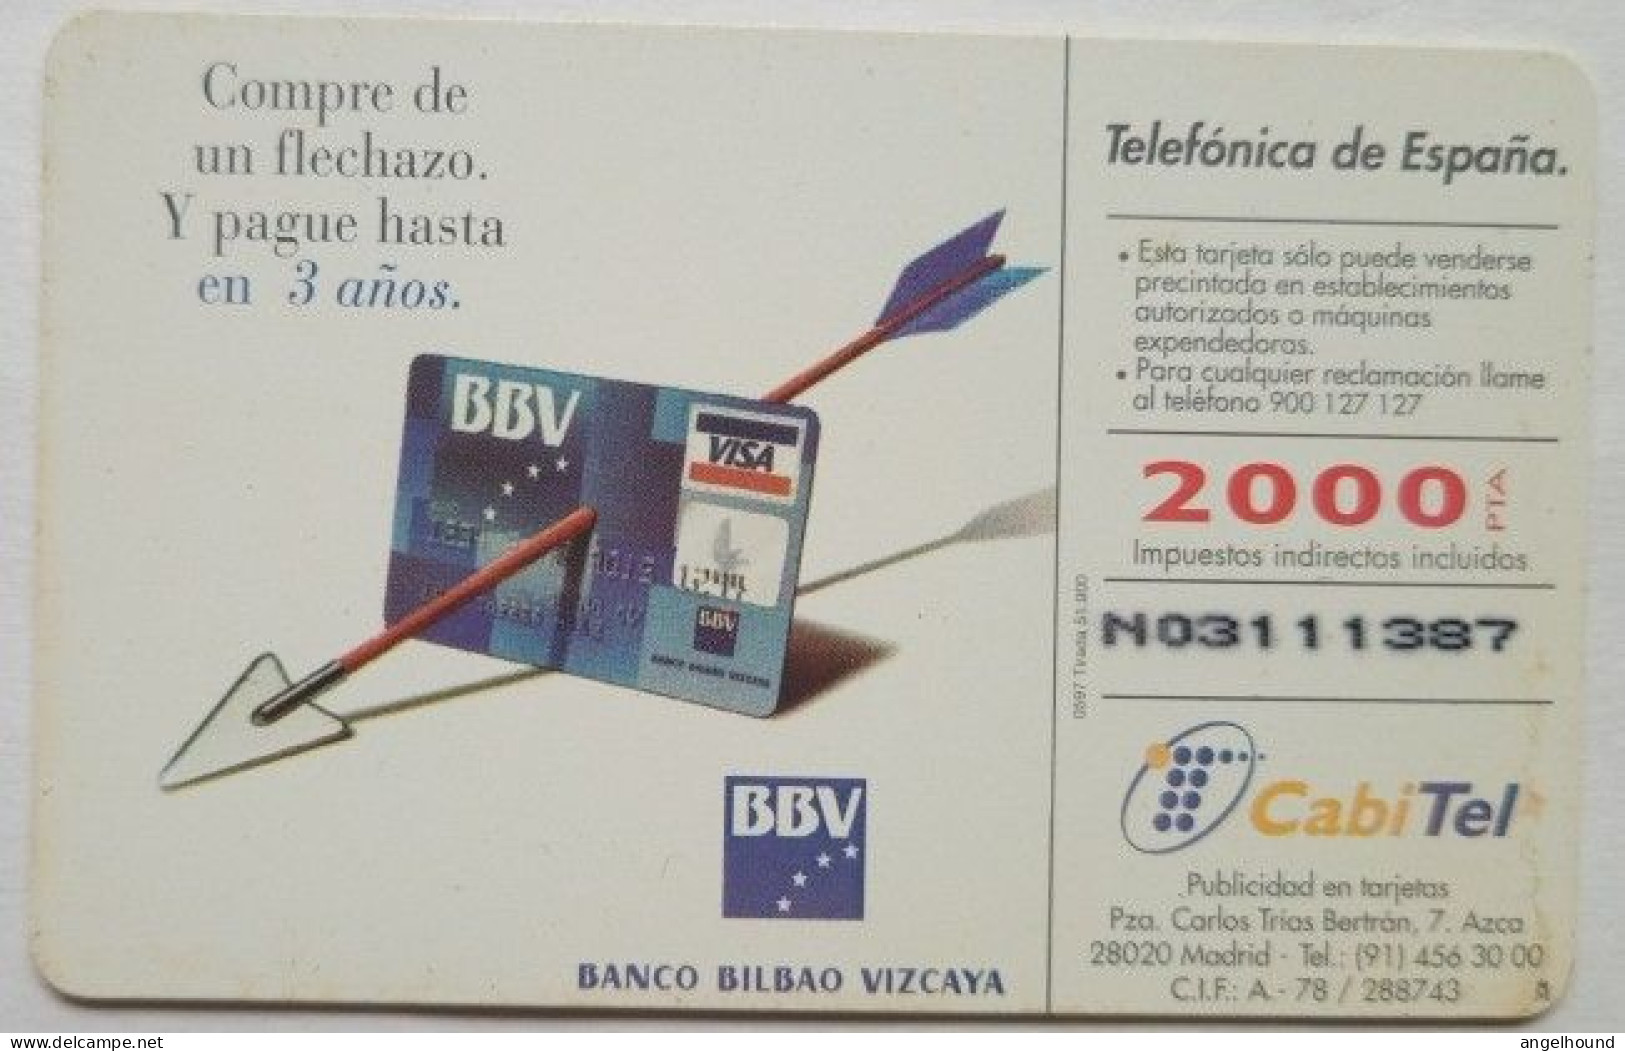 Spain 2000 Pta. Chip Card - Moneda Andalusi En La Alhambra - Basisausgaben